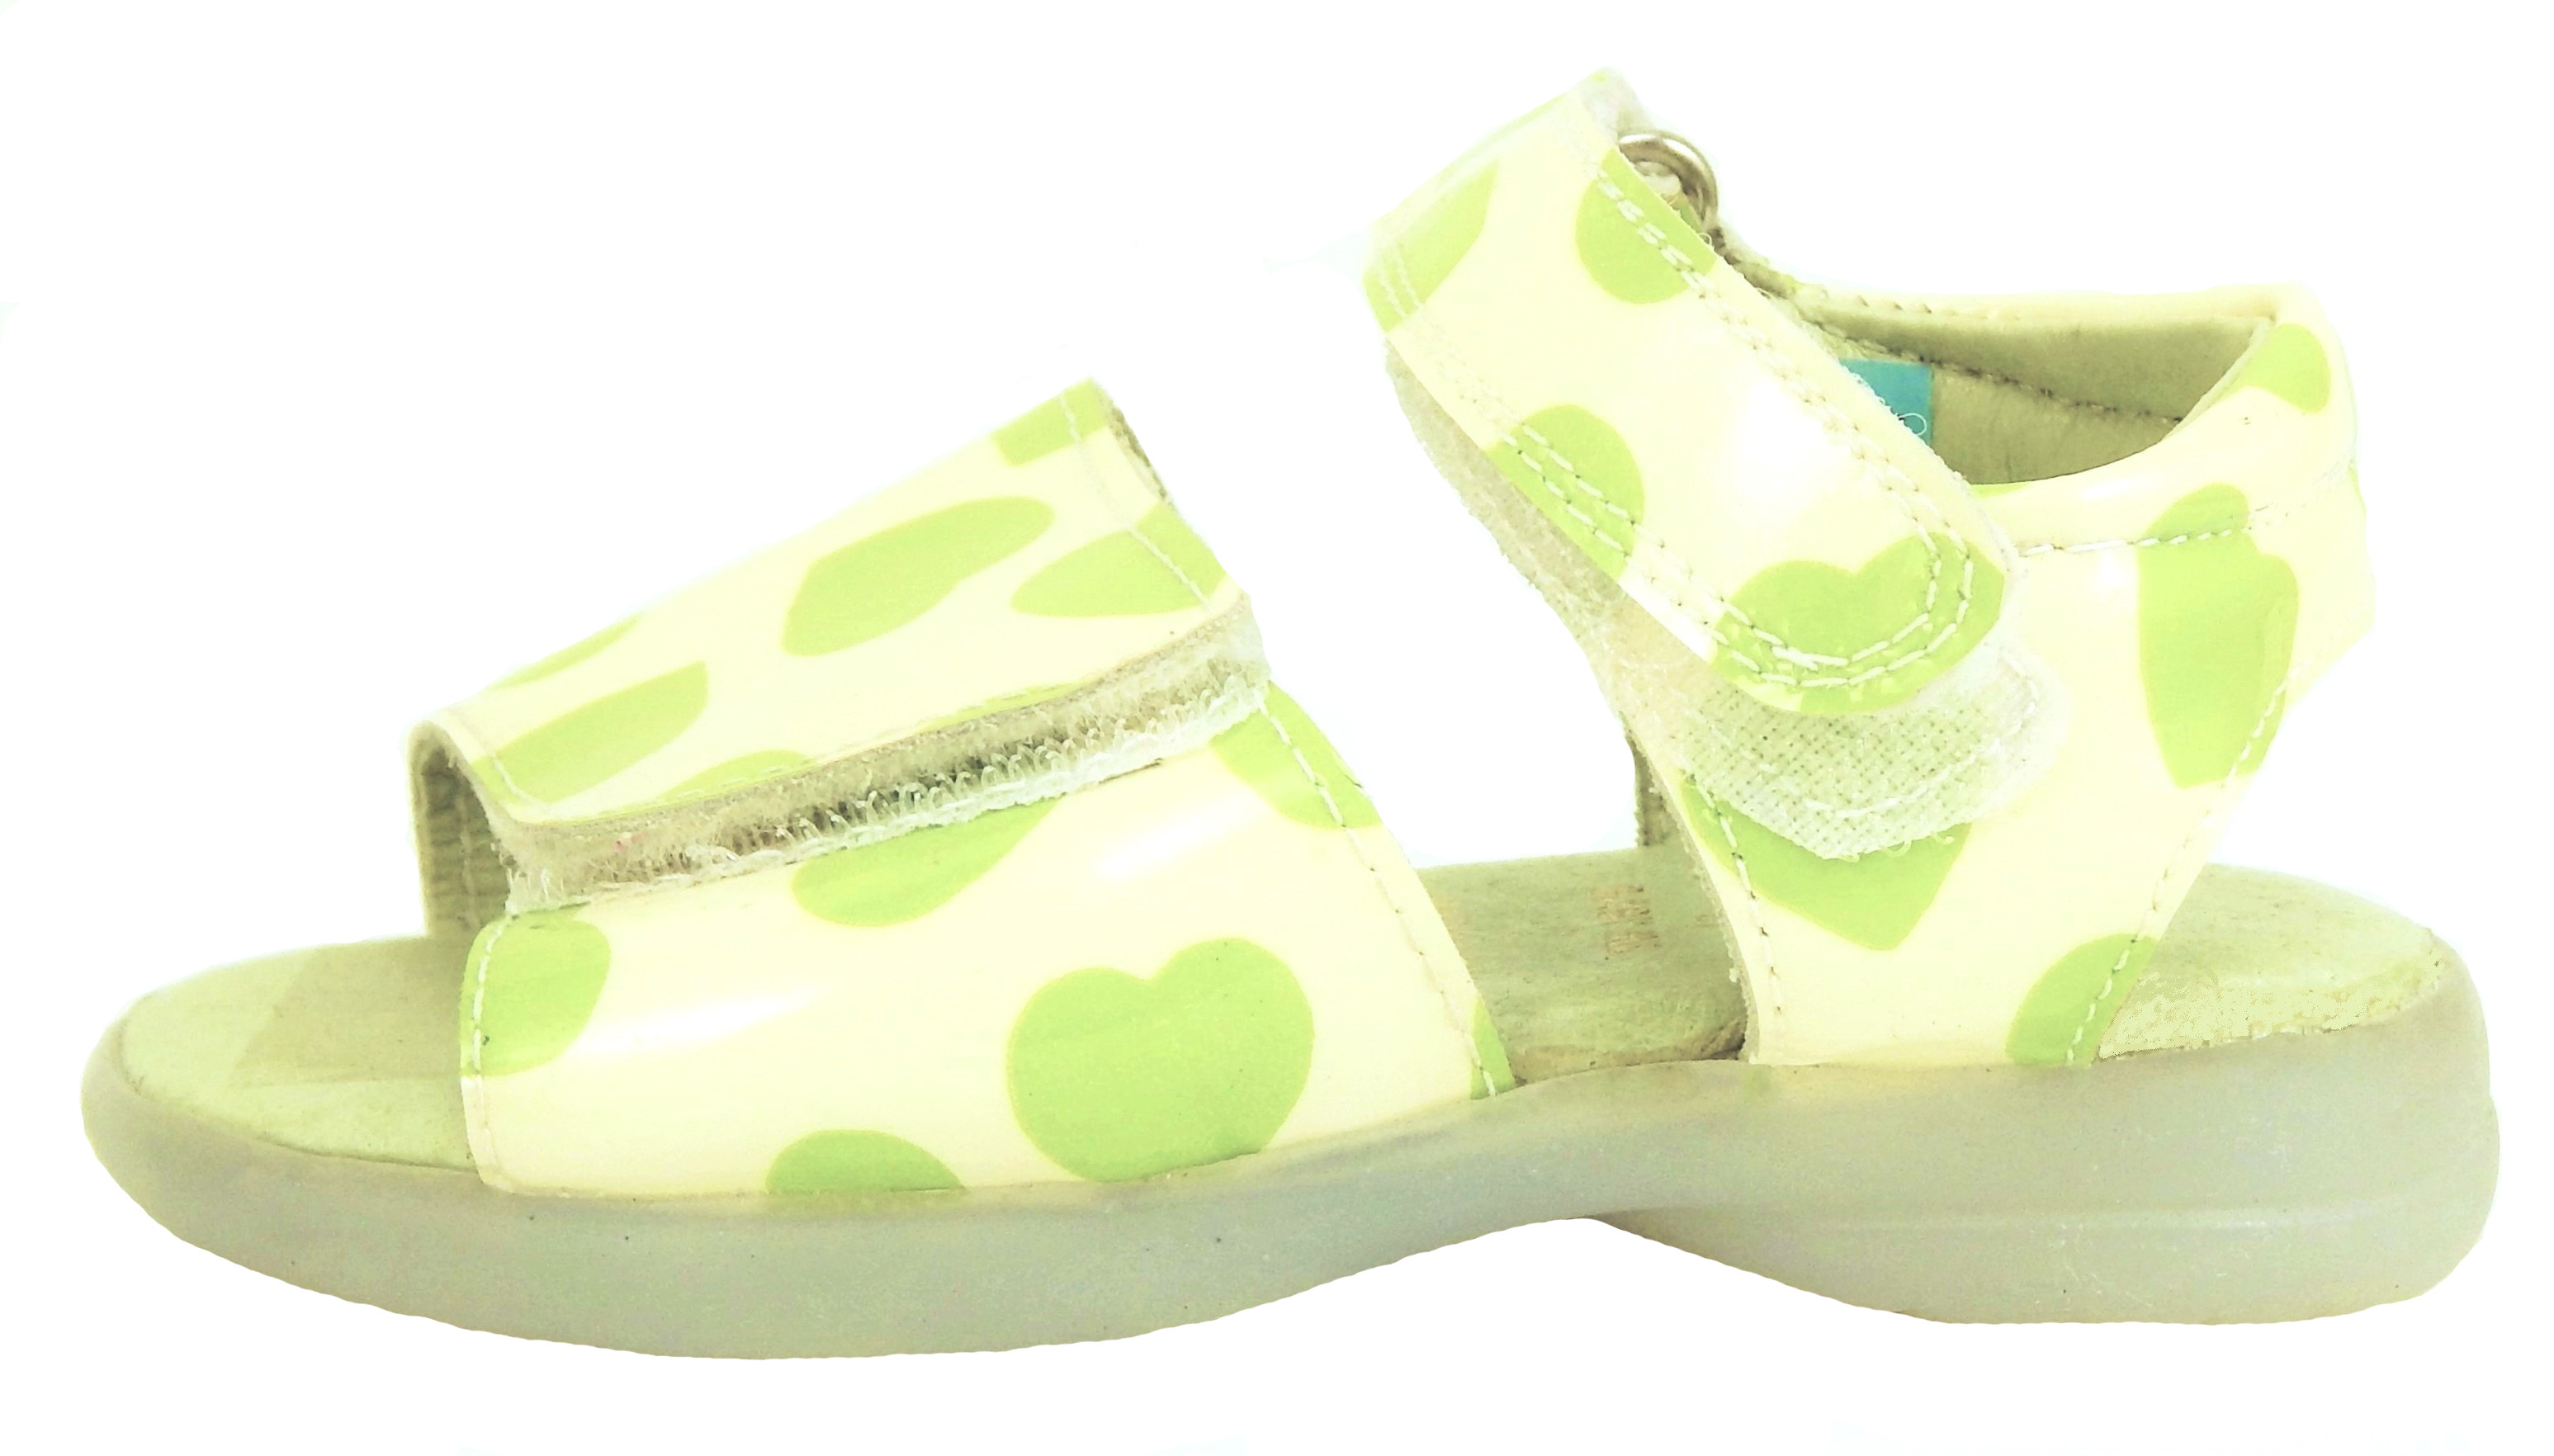 FARO B-063 - Lime Hearts Sandals - Euro 19 Size 4